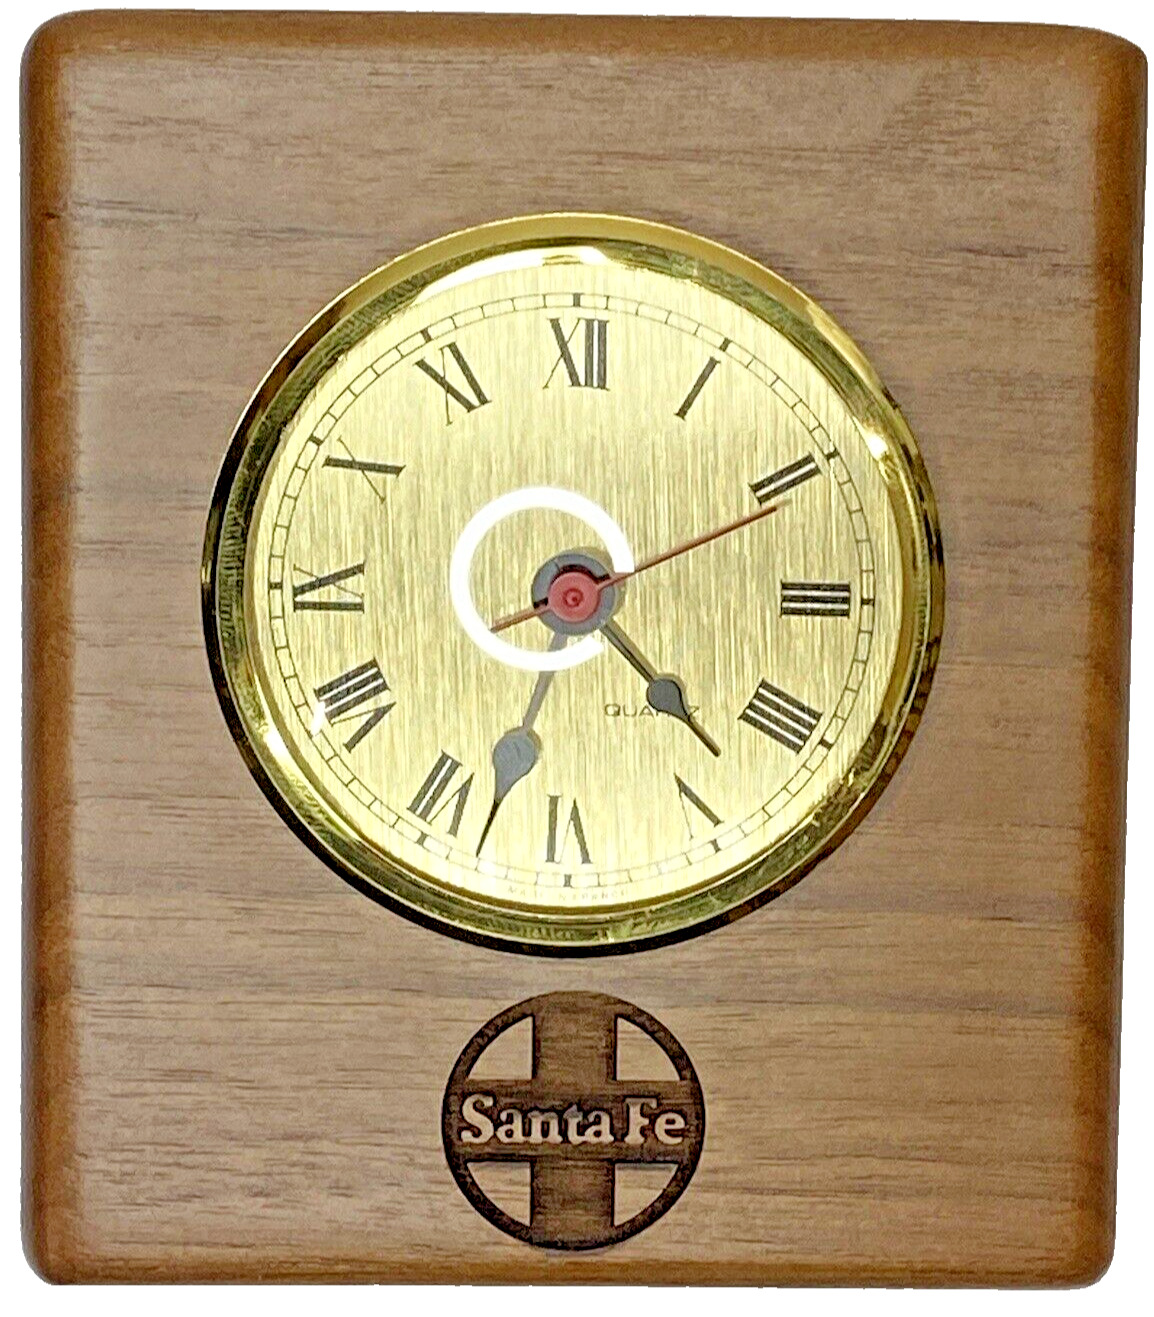 Santa Fe Railways Executive Desk Clock Wood 70mm Qtz Analog New Batt Works- VTG